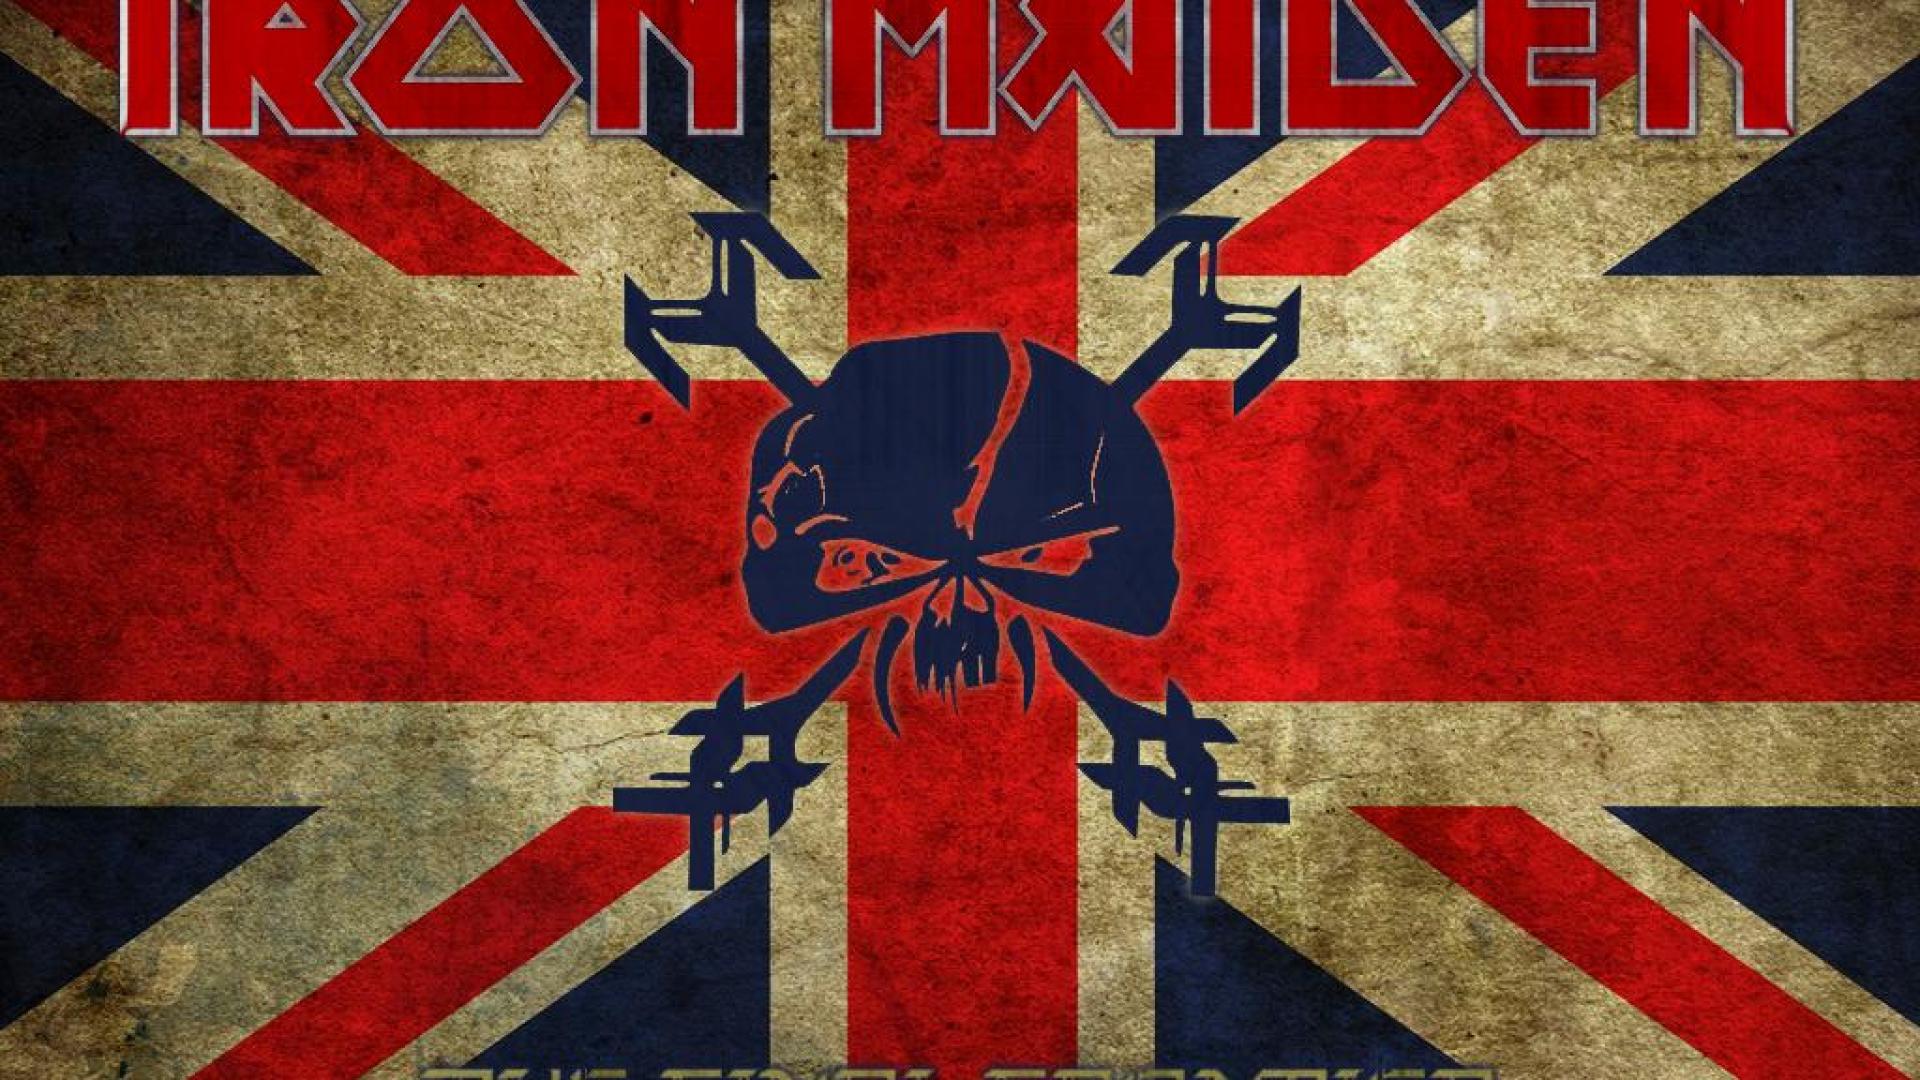 Iron Maiden HD Background Wallpaper 